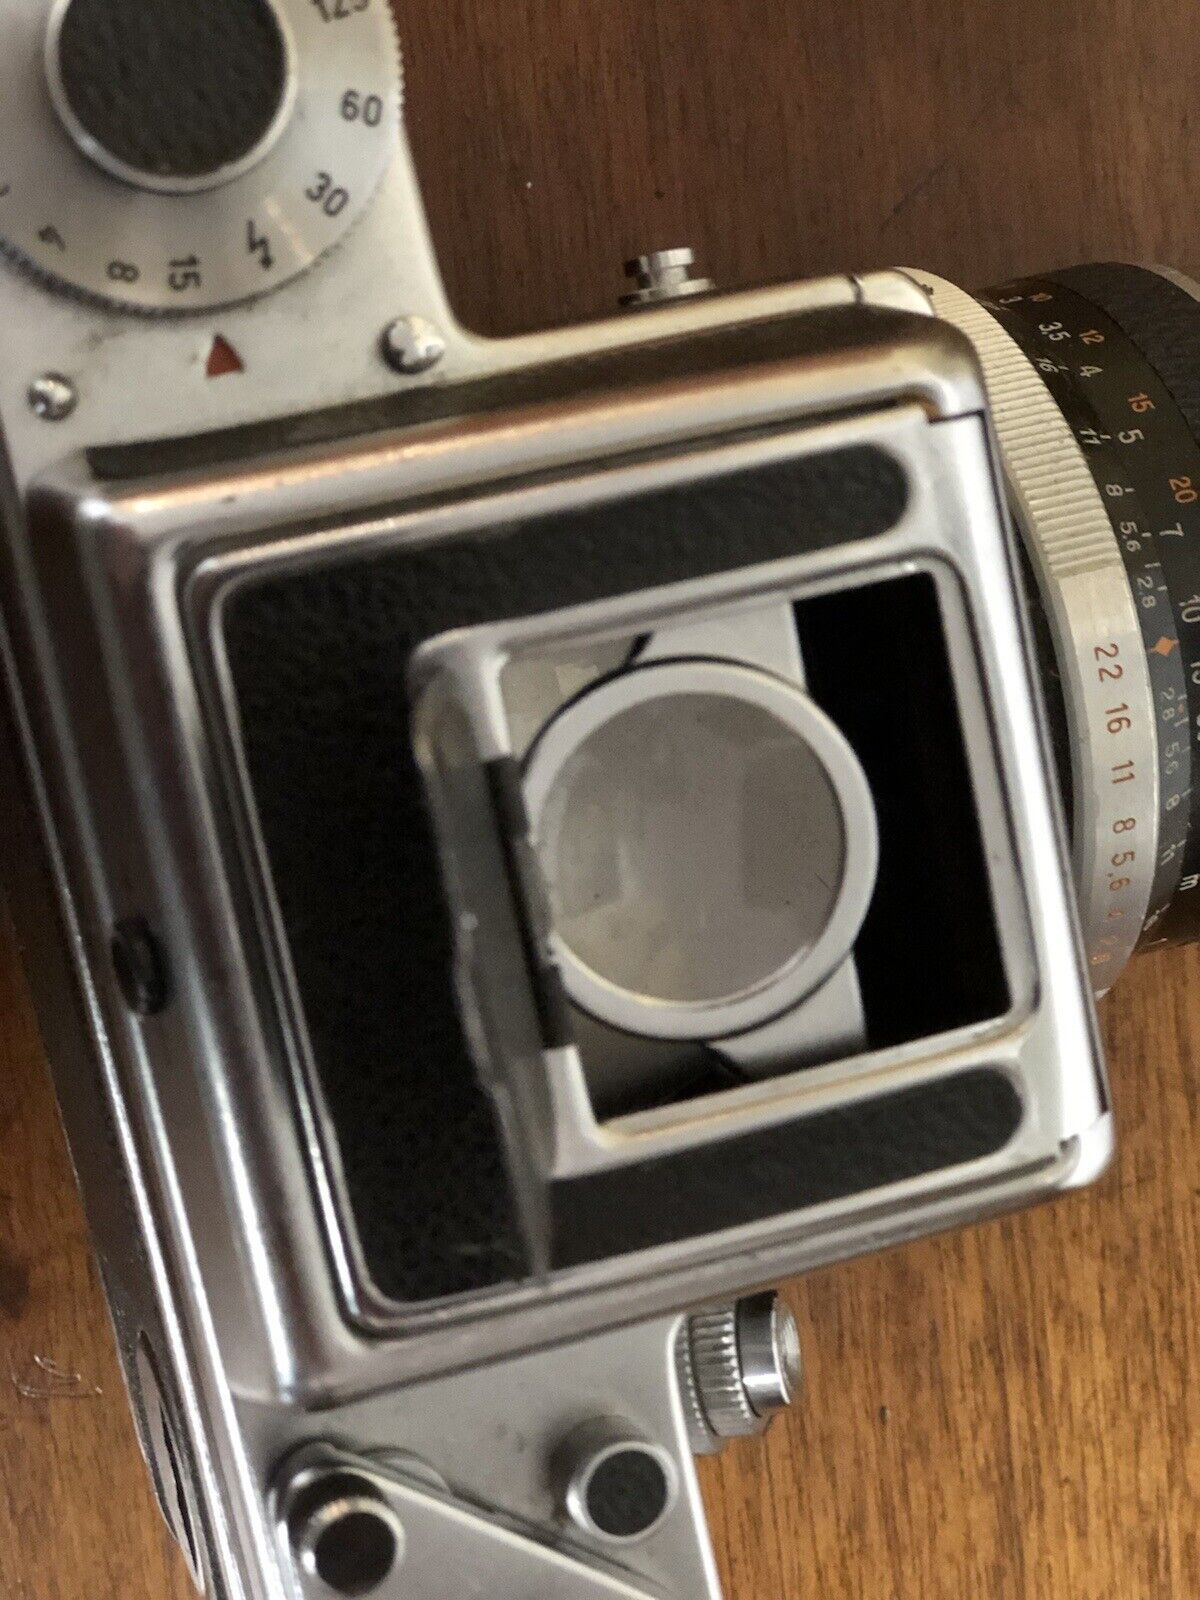 Vintage camera. Praktisix II a